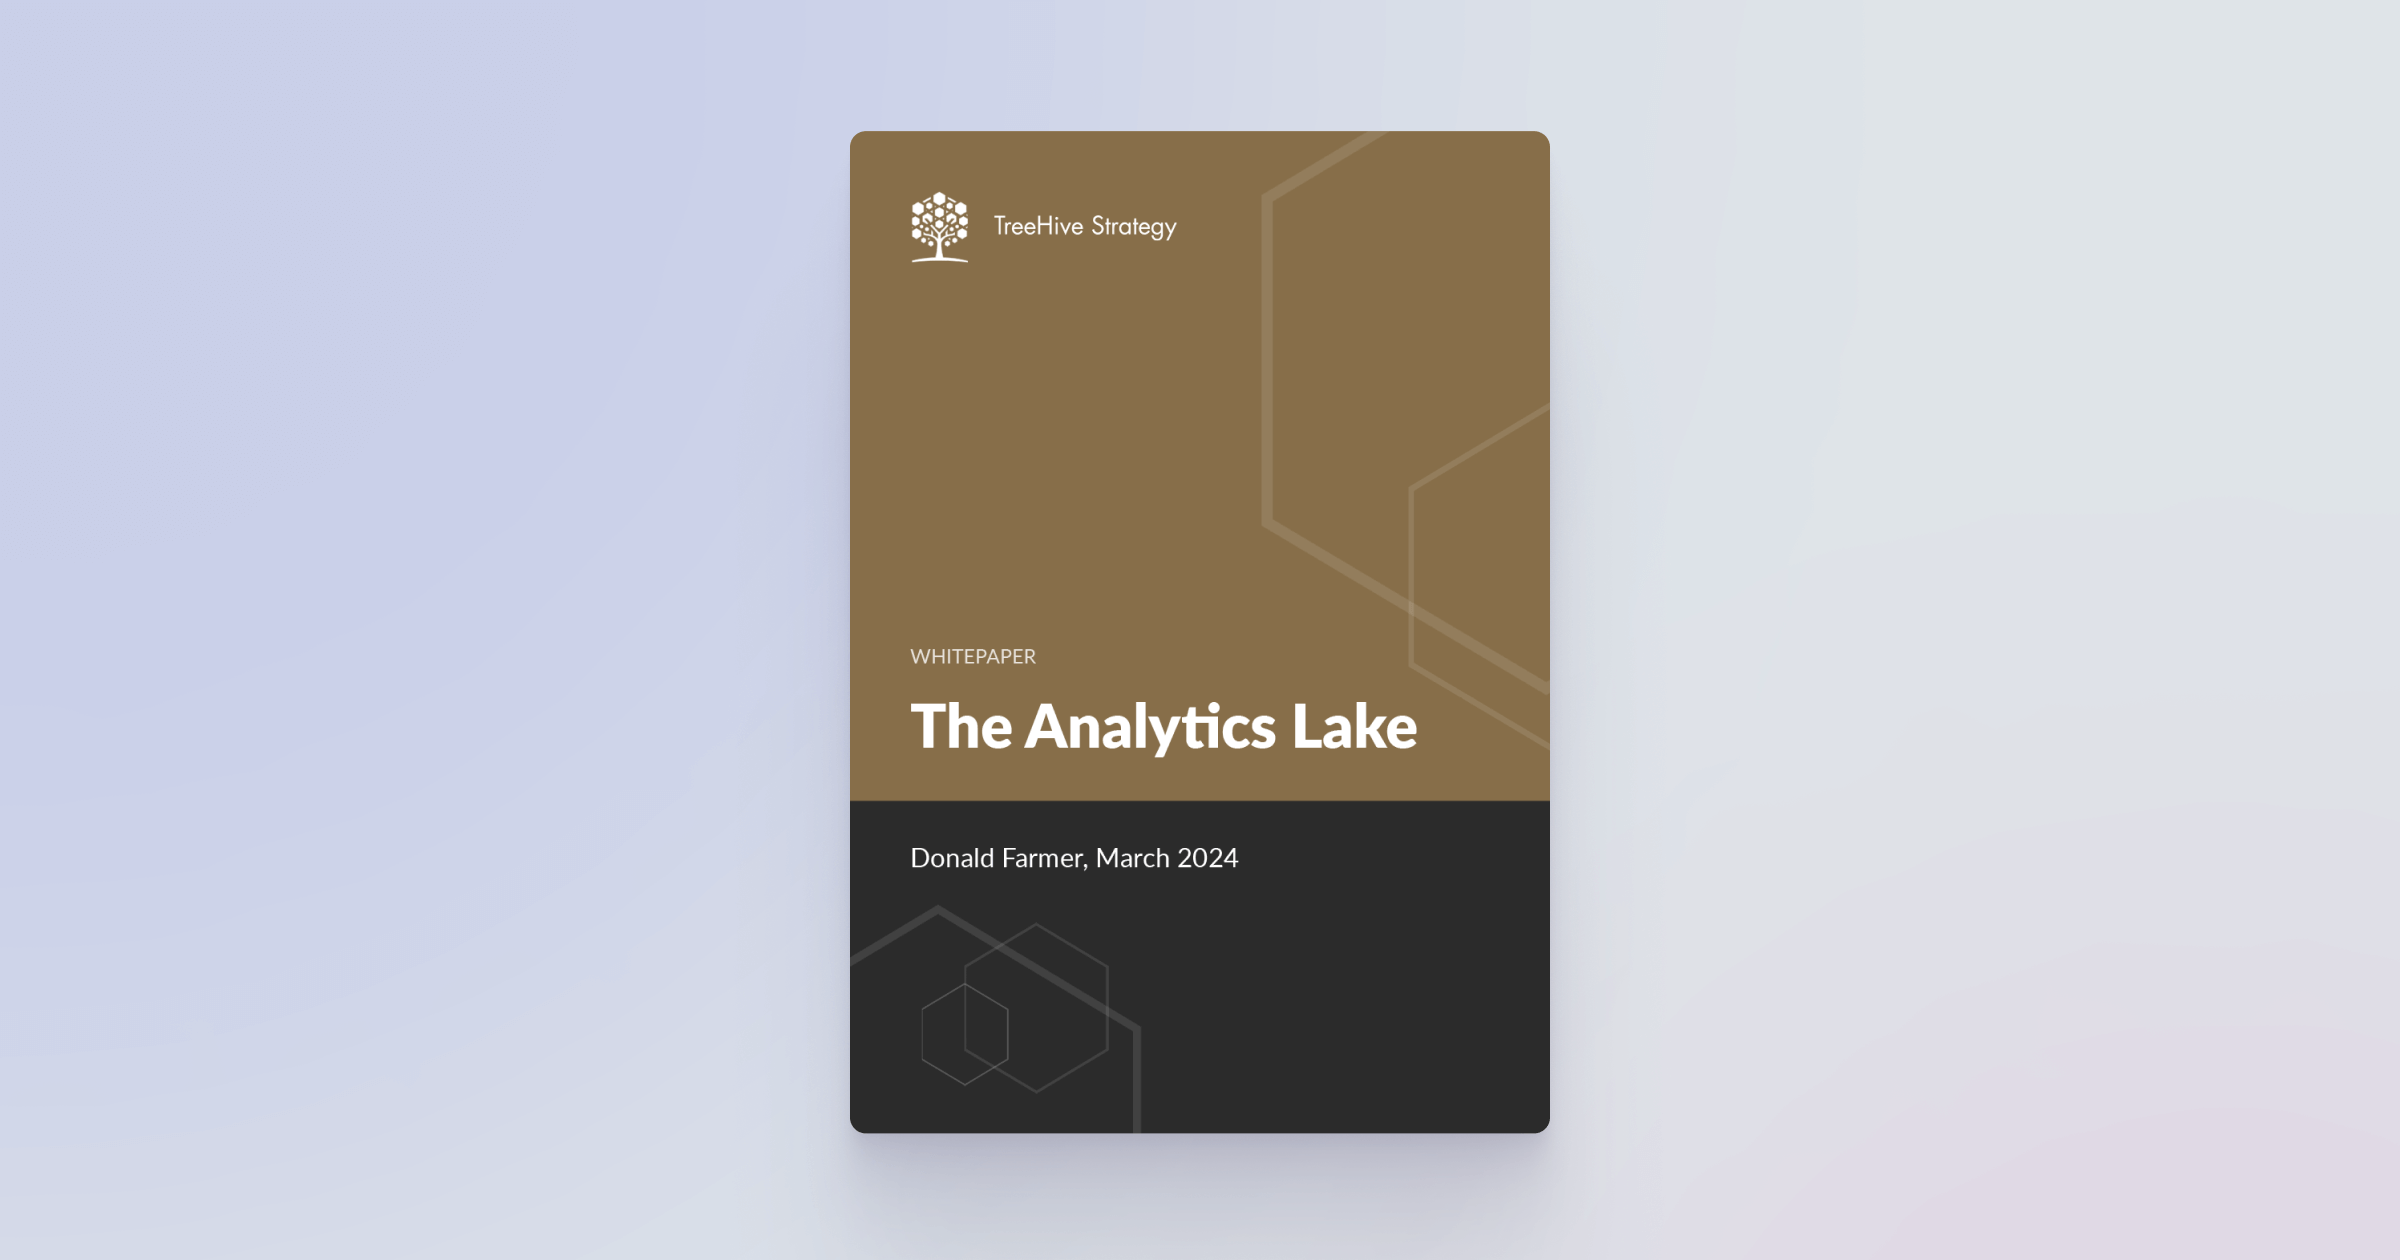 FlexQuery powers the GoodData Analytics Lake